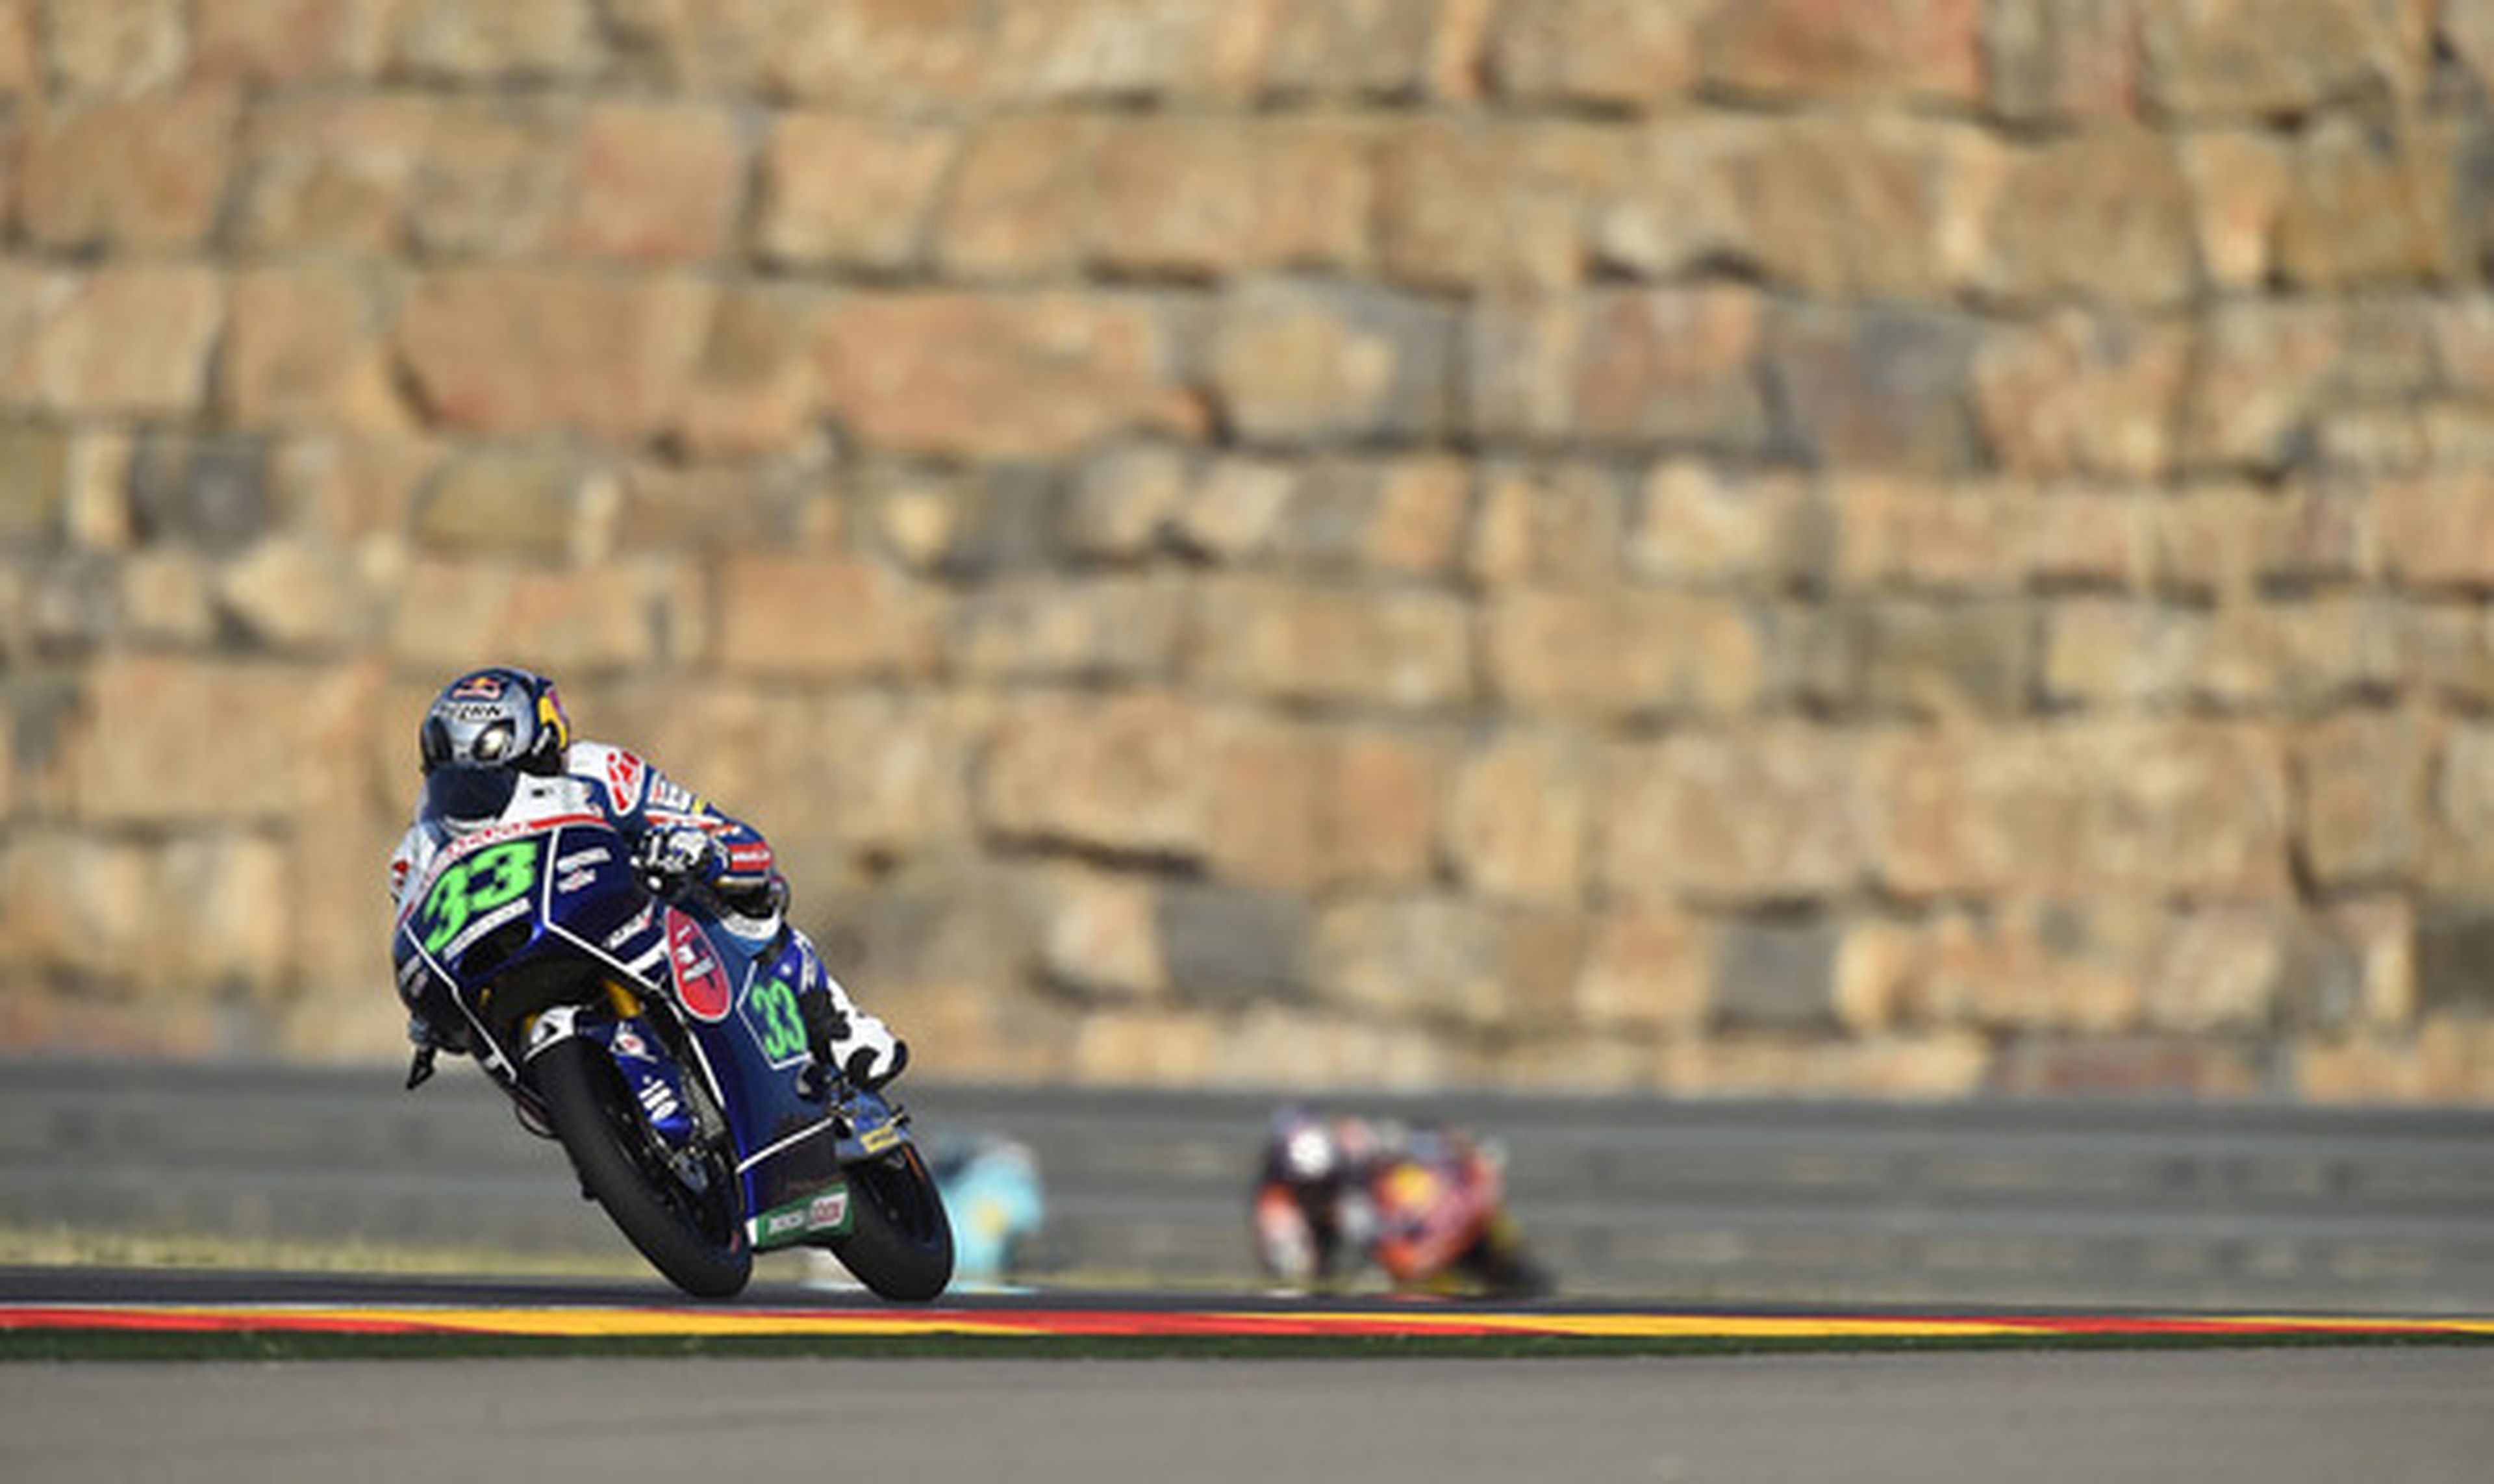 Clasificación Moto3 Aragon 2015: Bastianini sigue de dulce